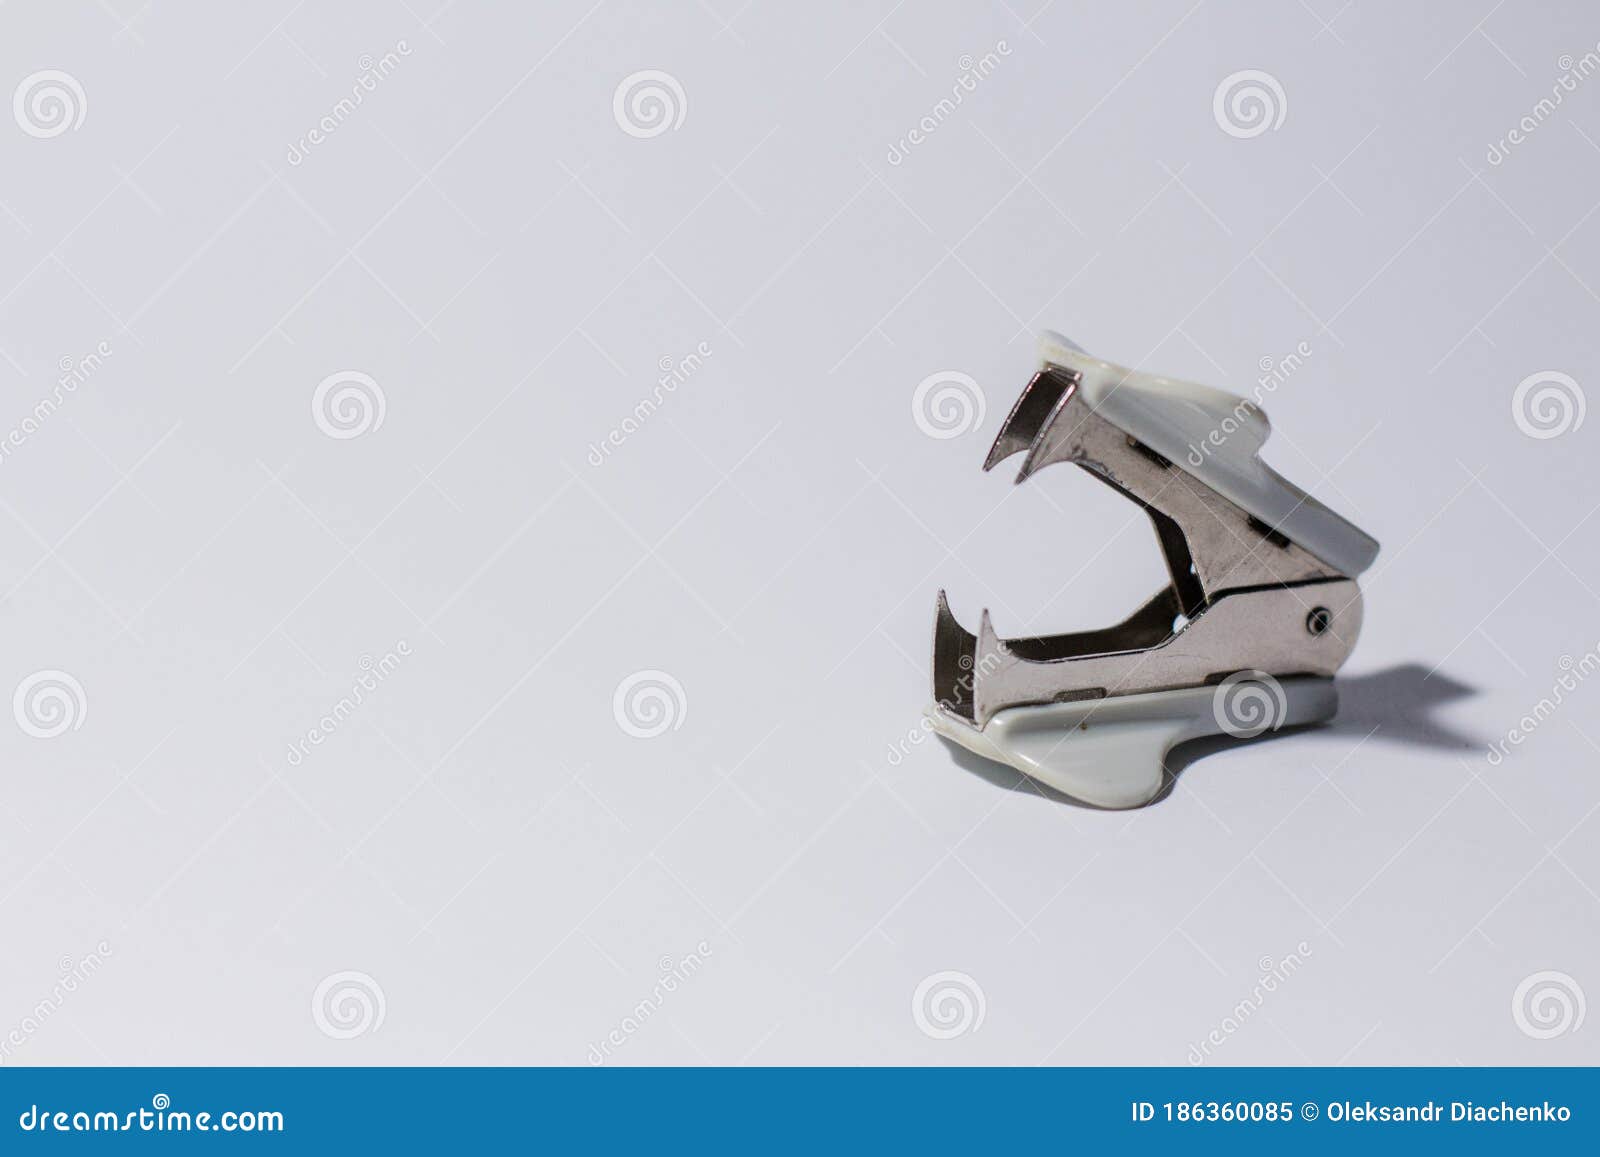 Anti-stapler on a White Background Stock Image - Image of closeup ...